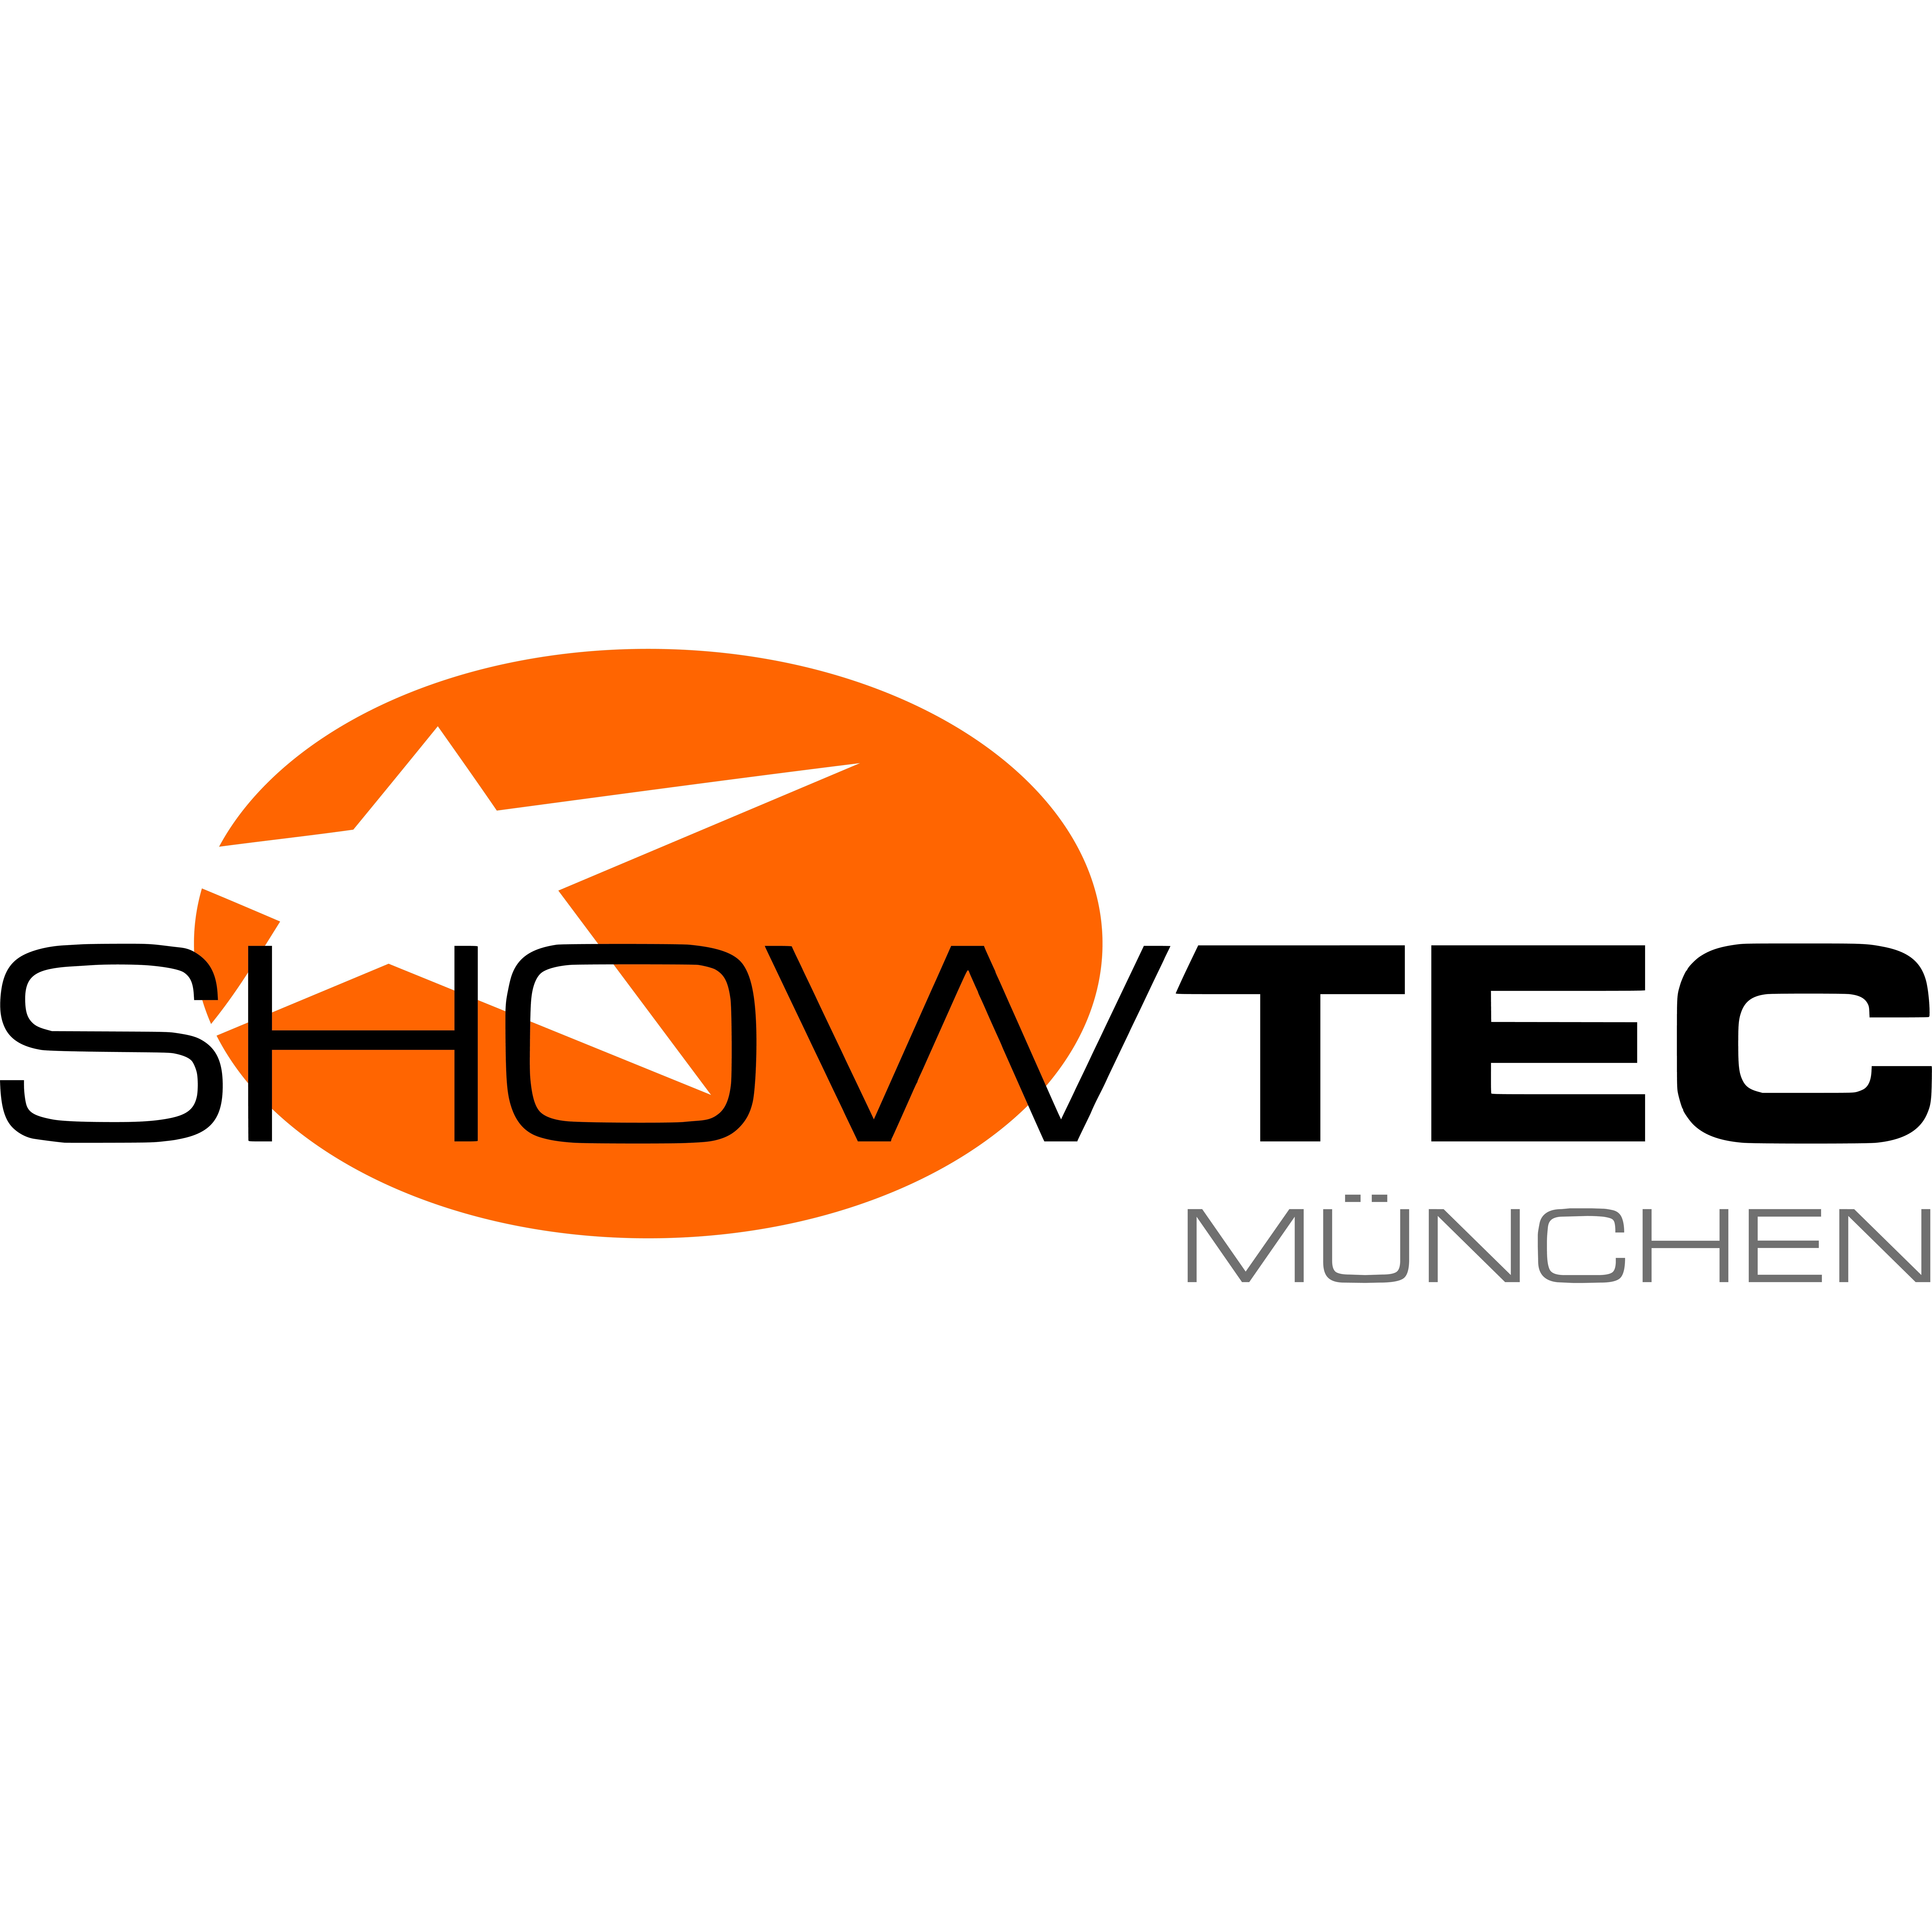 SHOWTEC München GmbH Logo